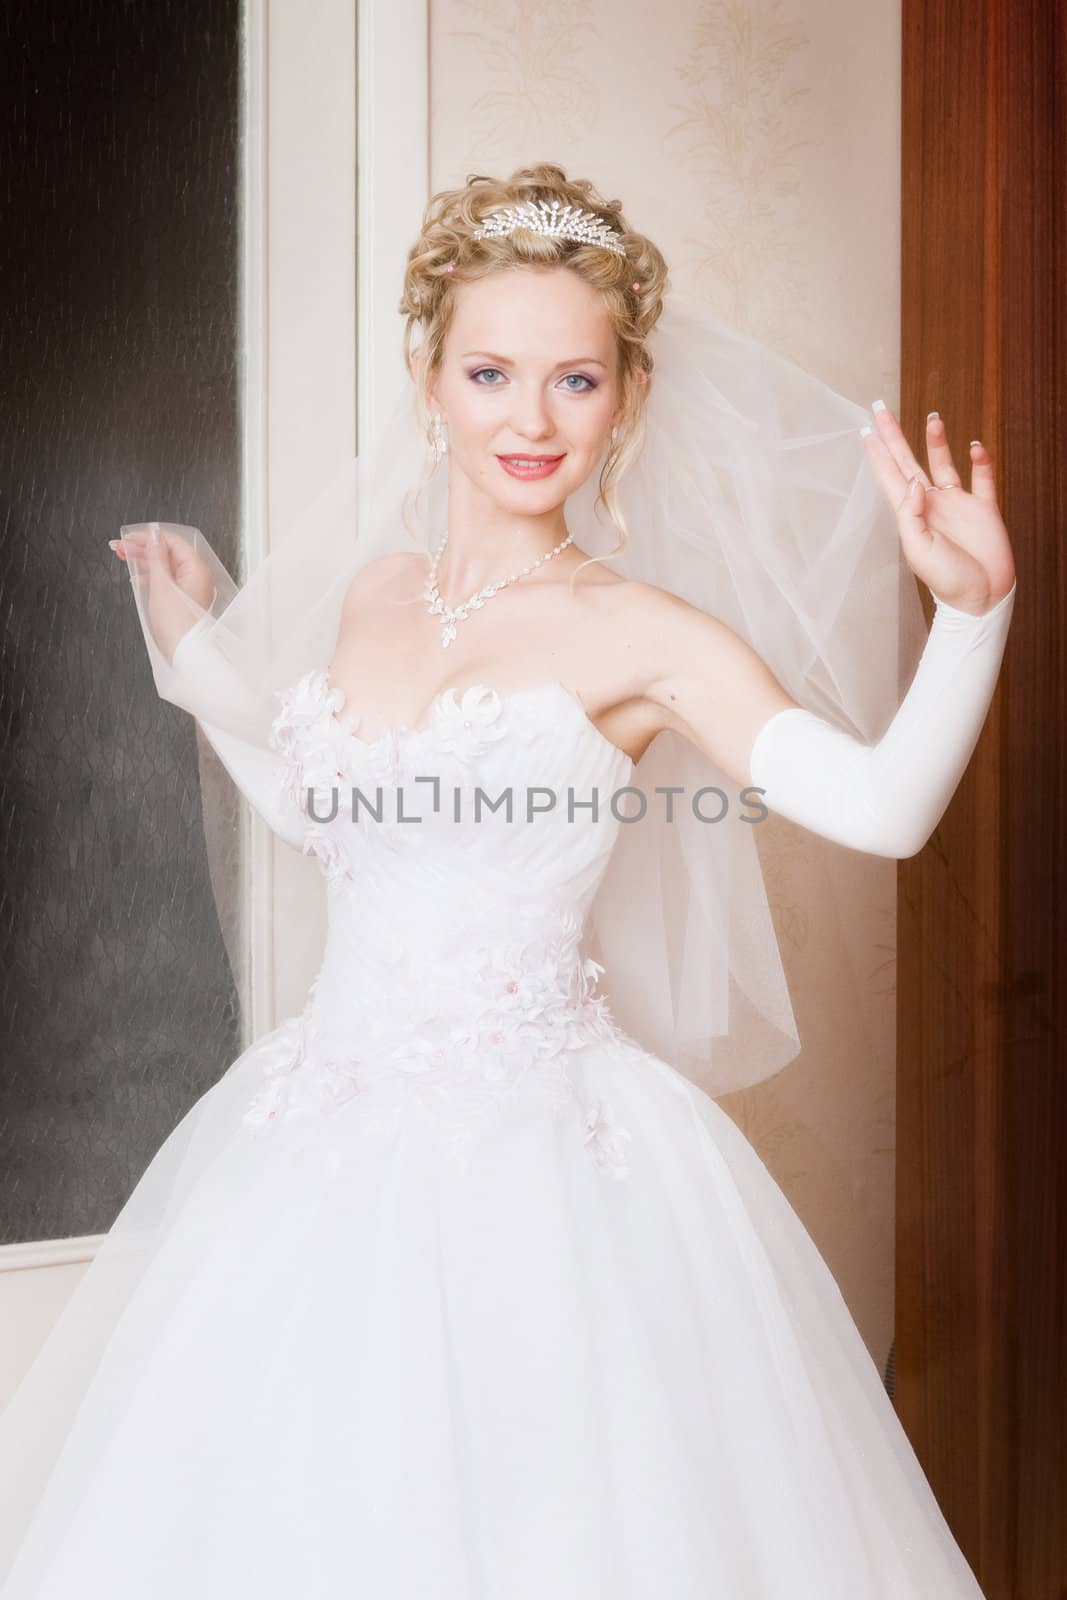 a bride with a veil looks playfully